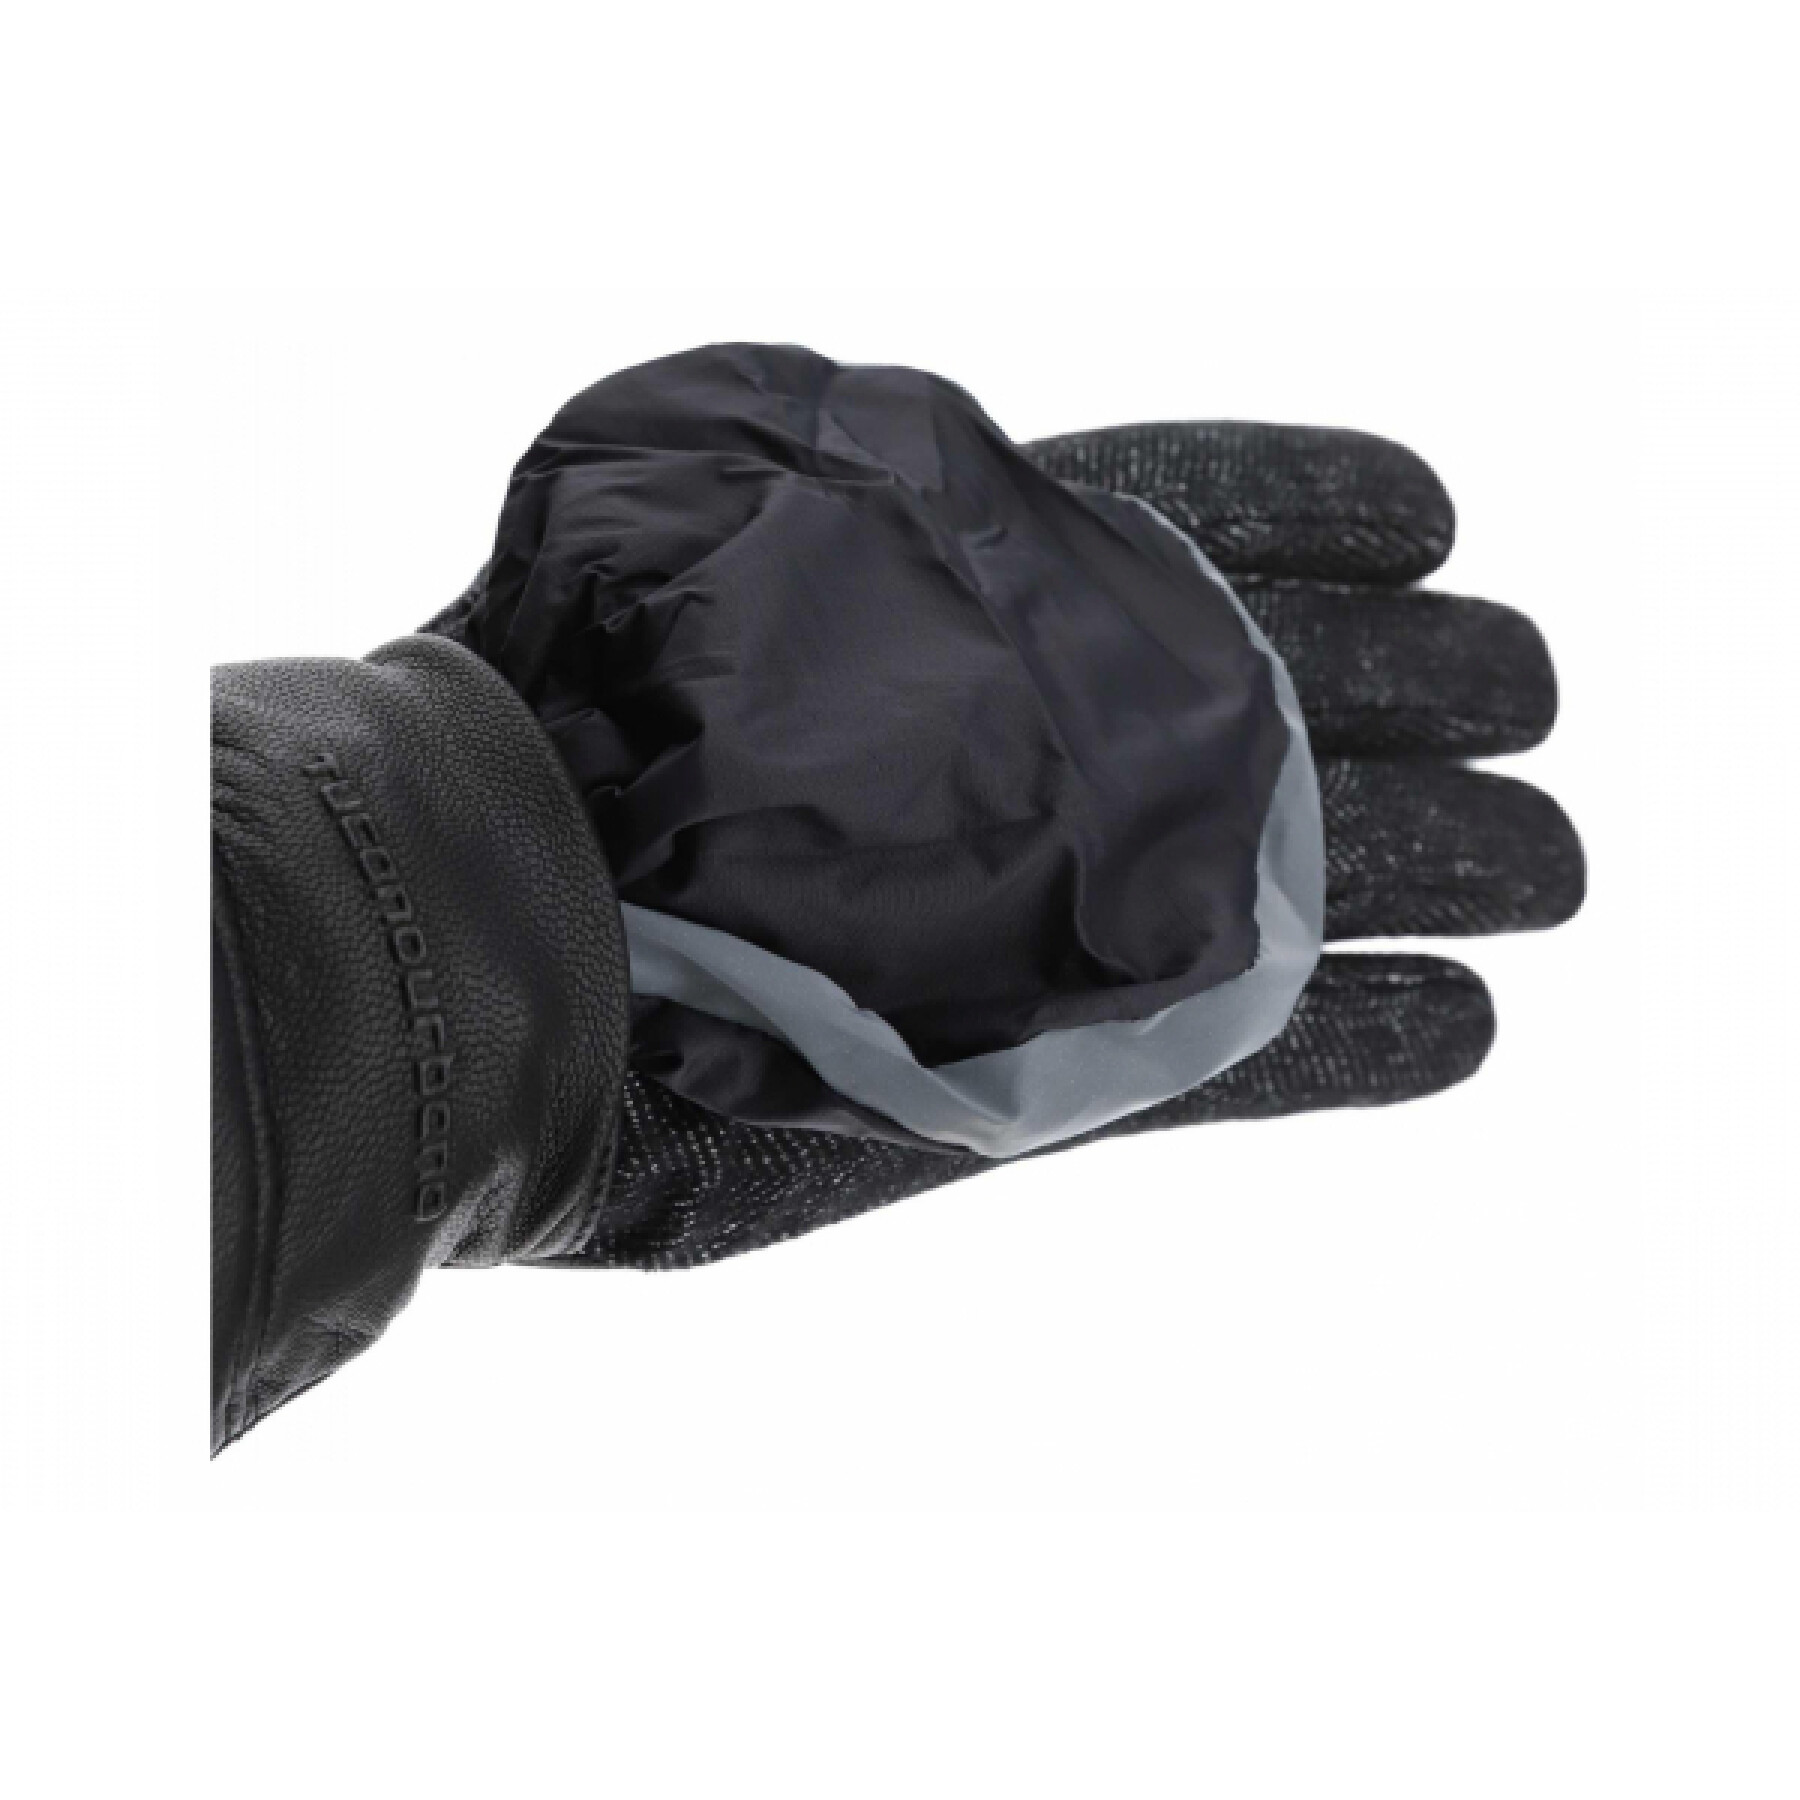 Long city bike gloves with integrated rain glove Tucano Urbano Carbio